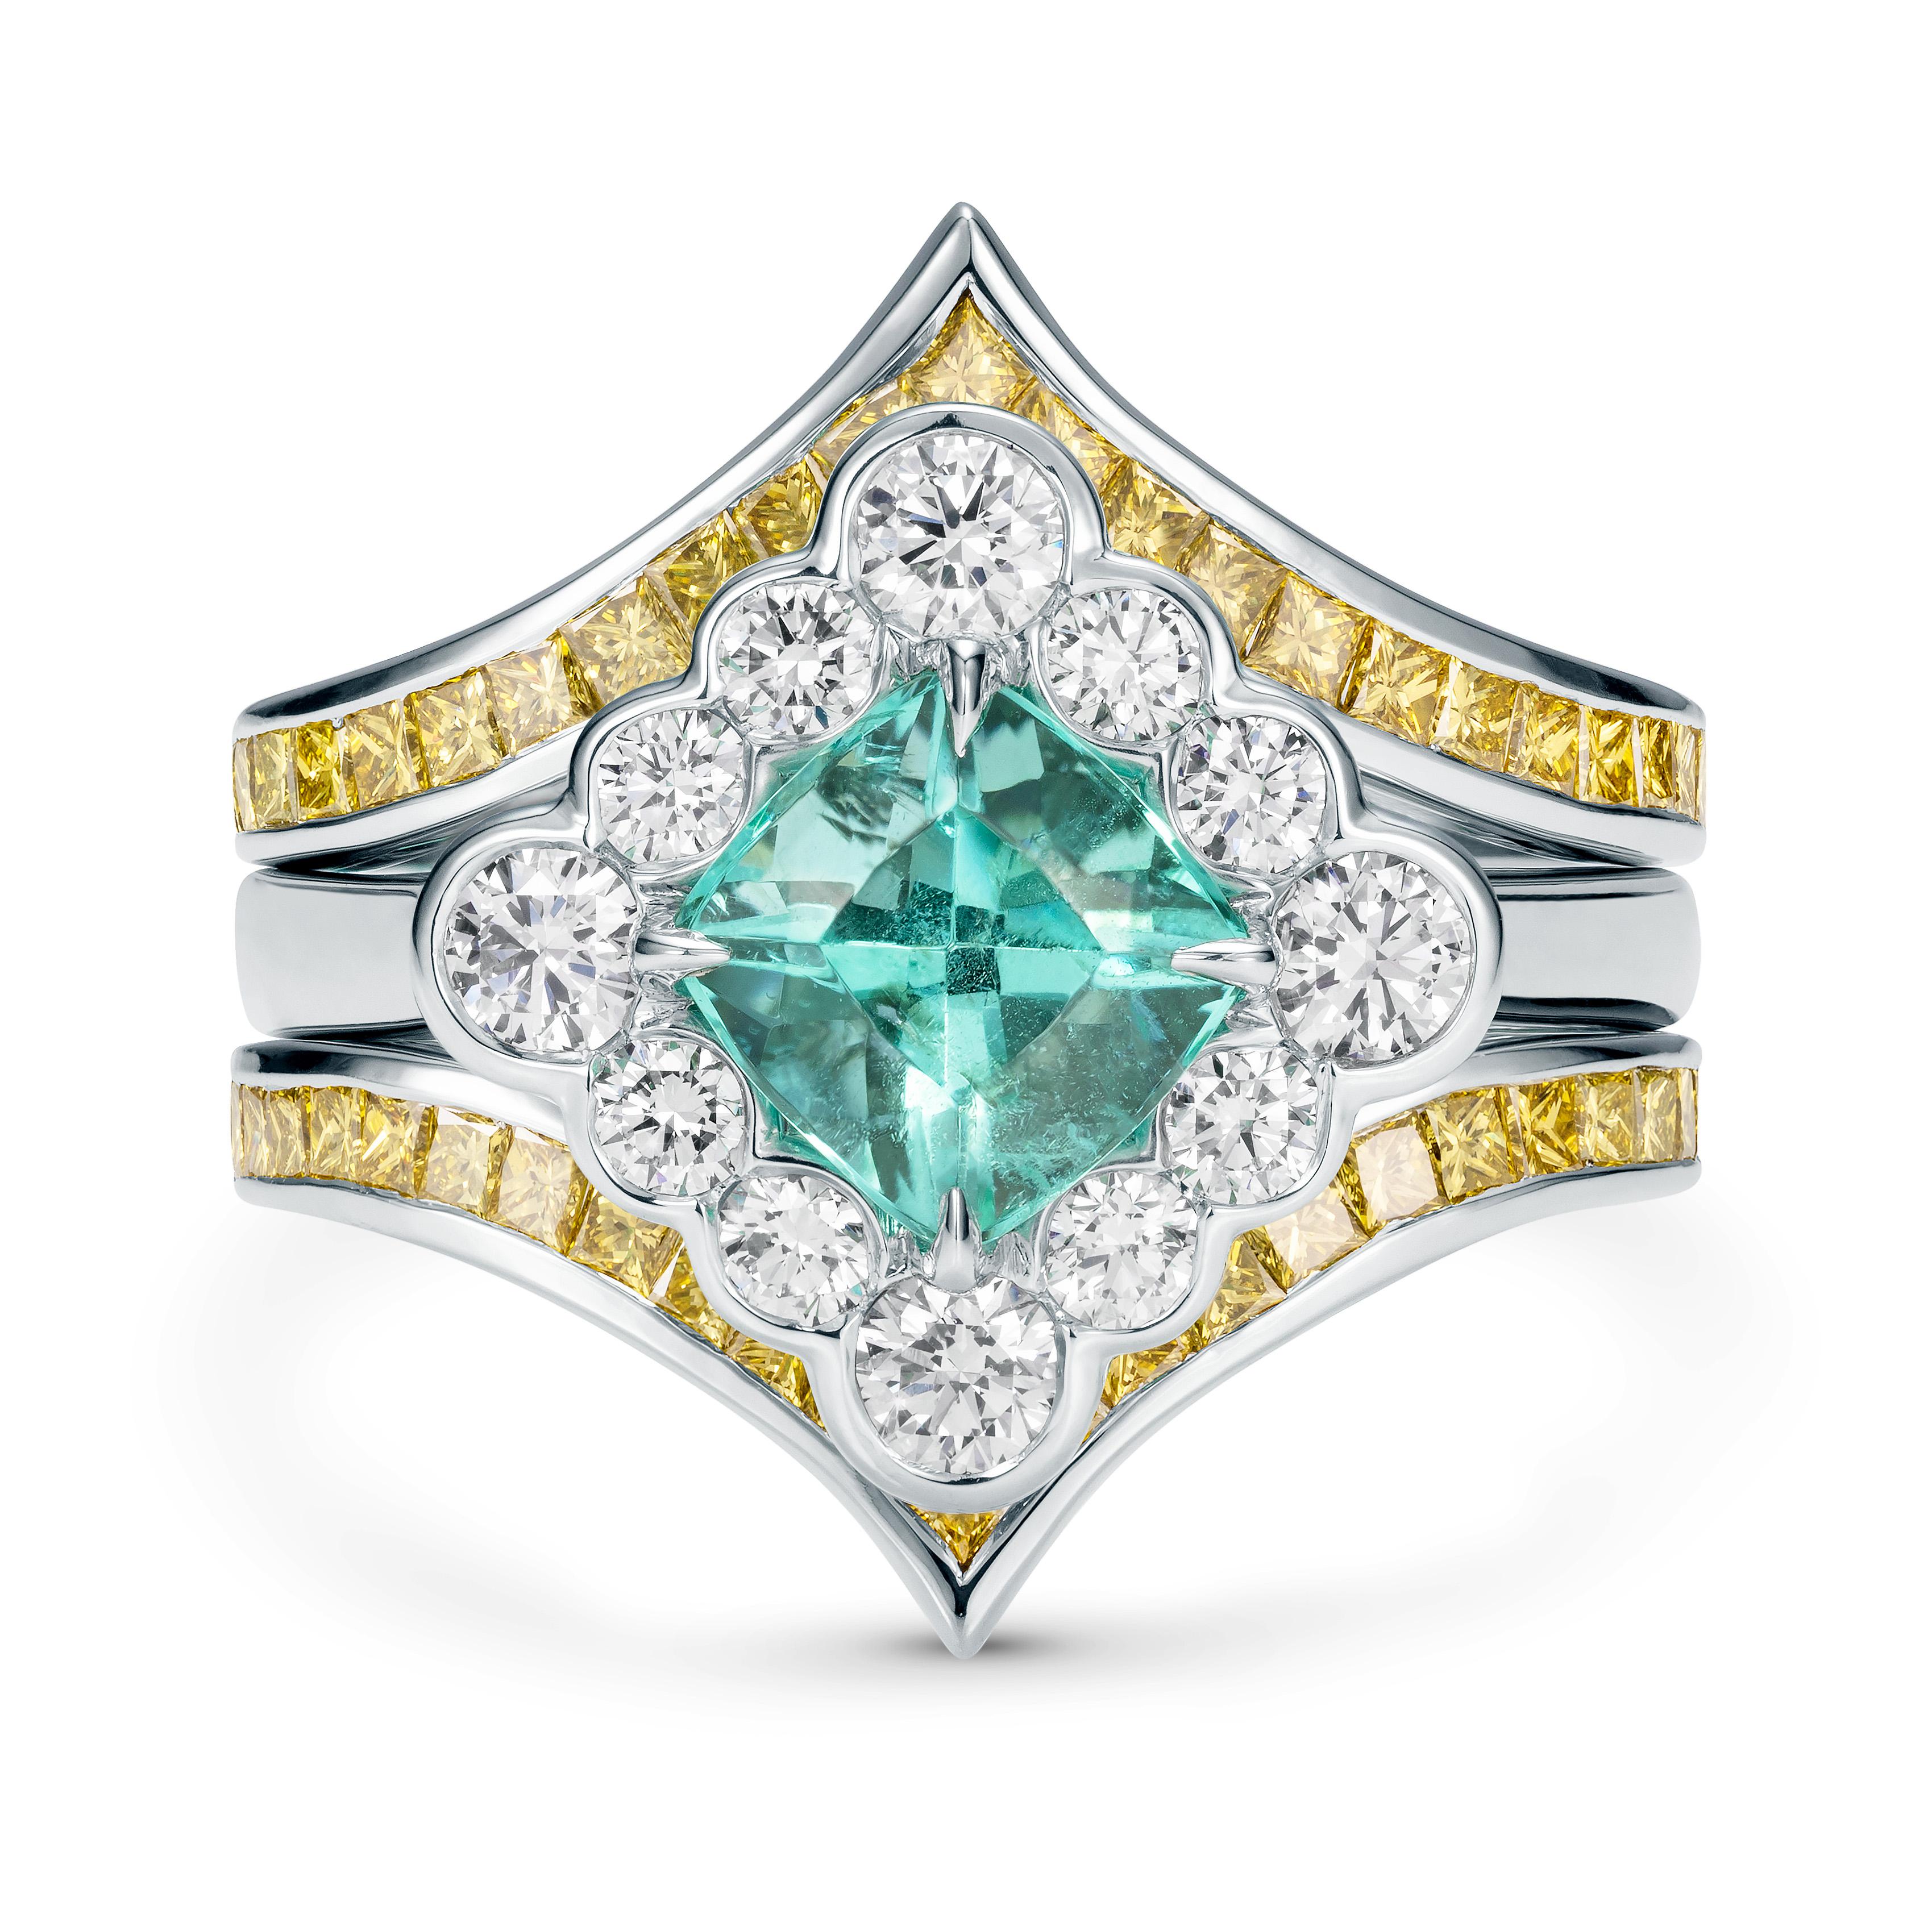 Marcel Salloum 1.05 Carat Paraiba Tourmaline Diamond Engagement Ring in Platinum For Sale 1